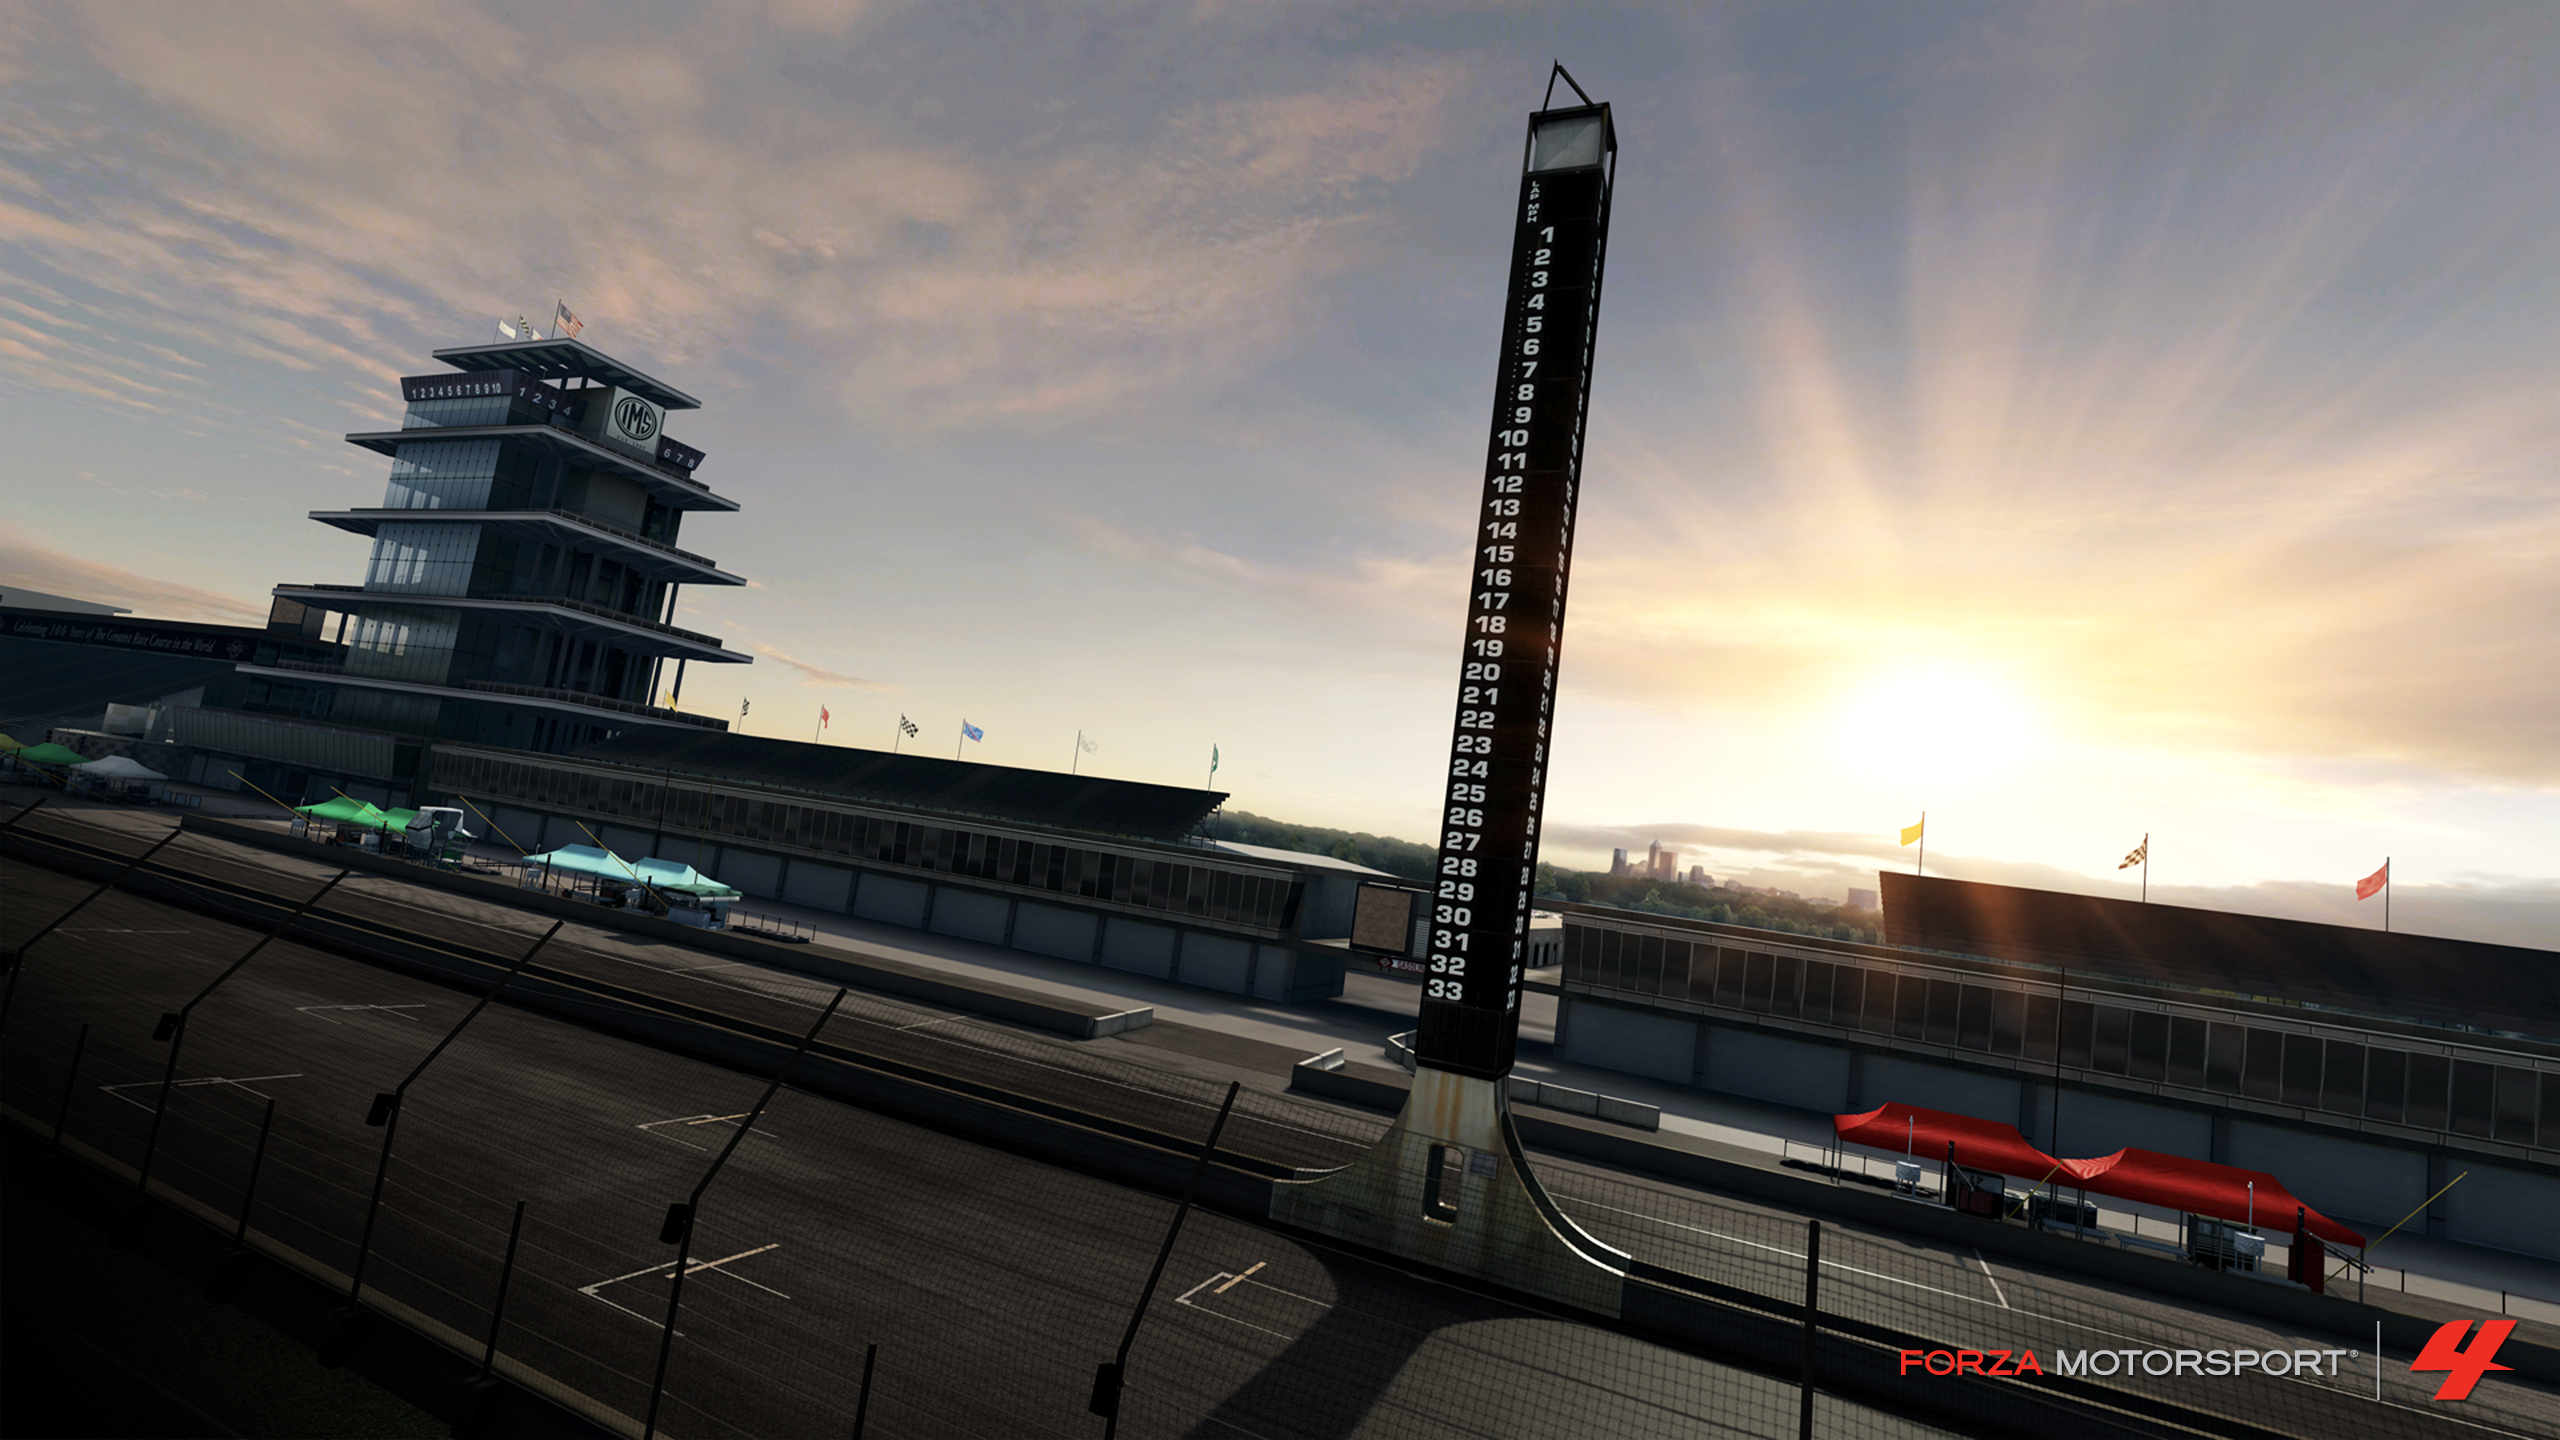 Indianapolis Motor Speedway De Forza Officialis En Image